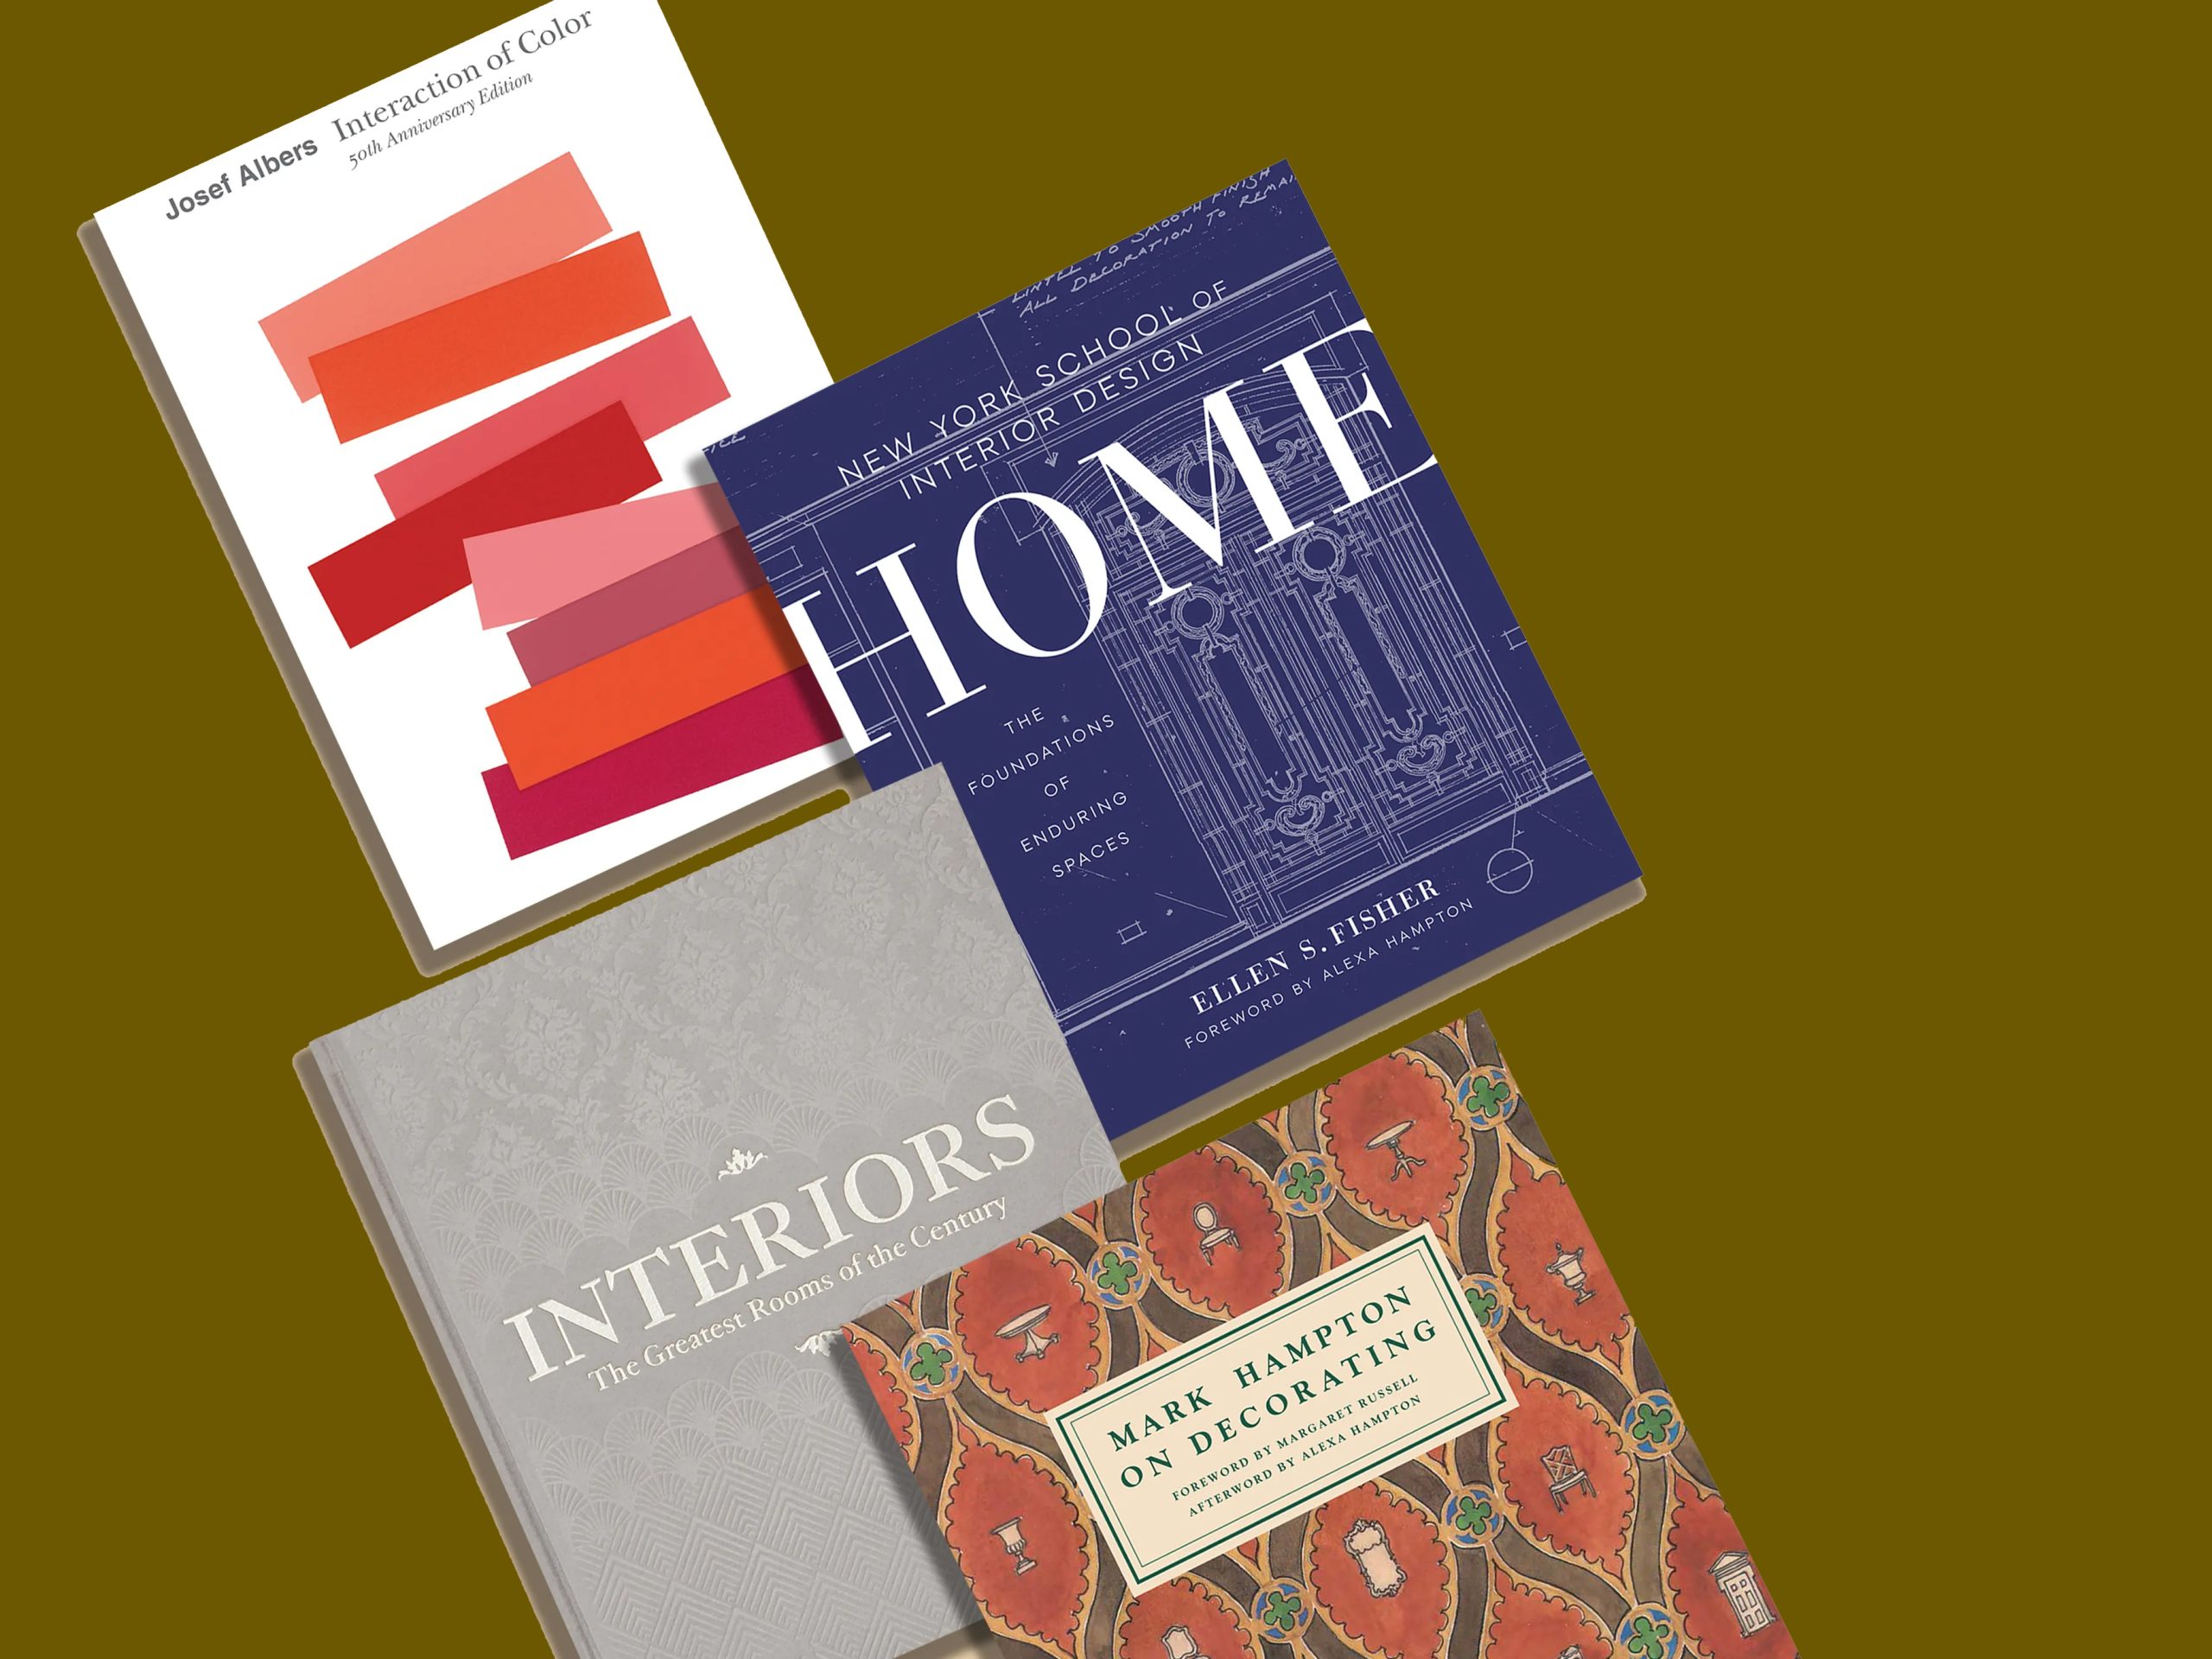 Best Books on Furniture Design